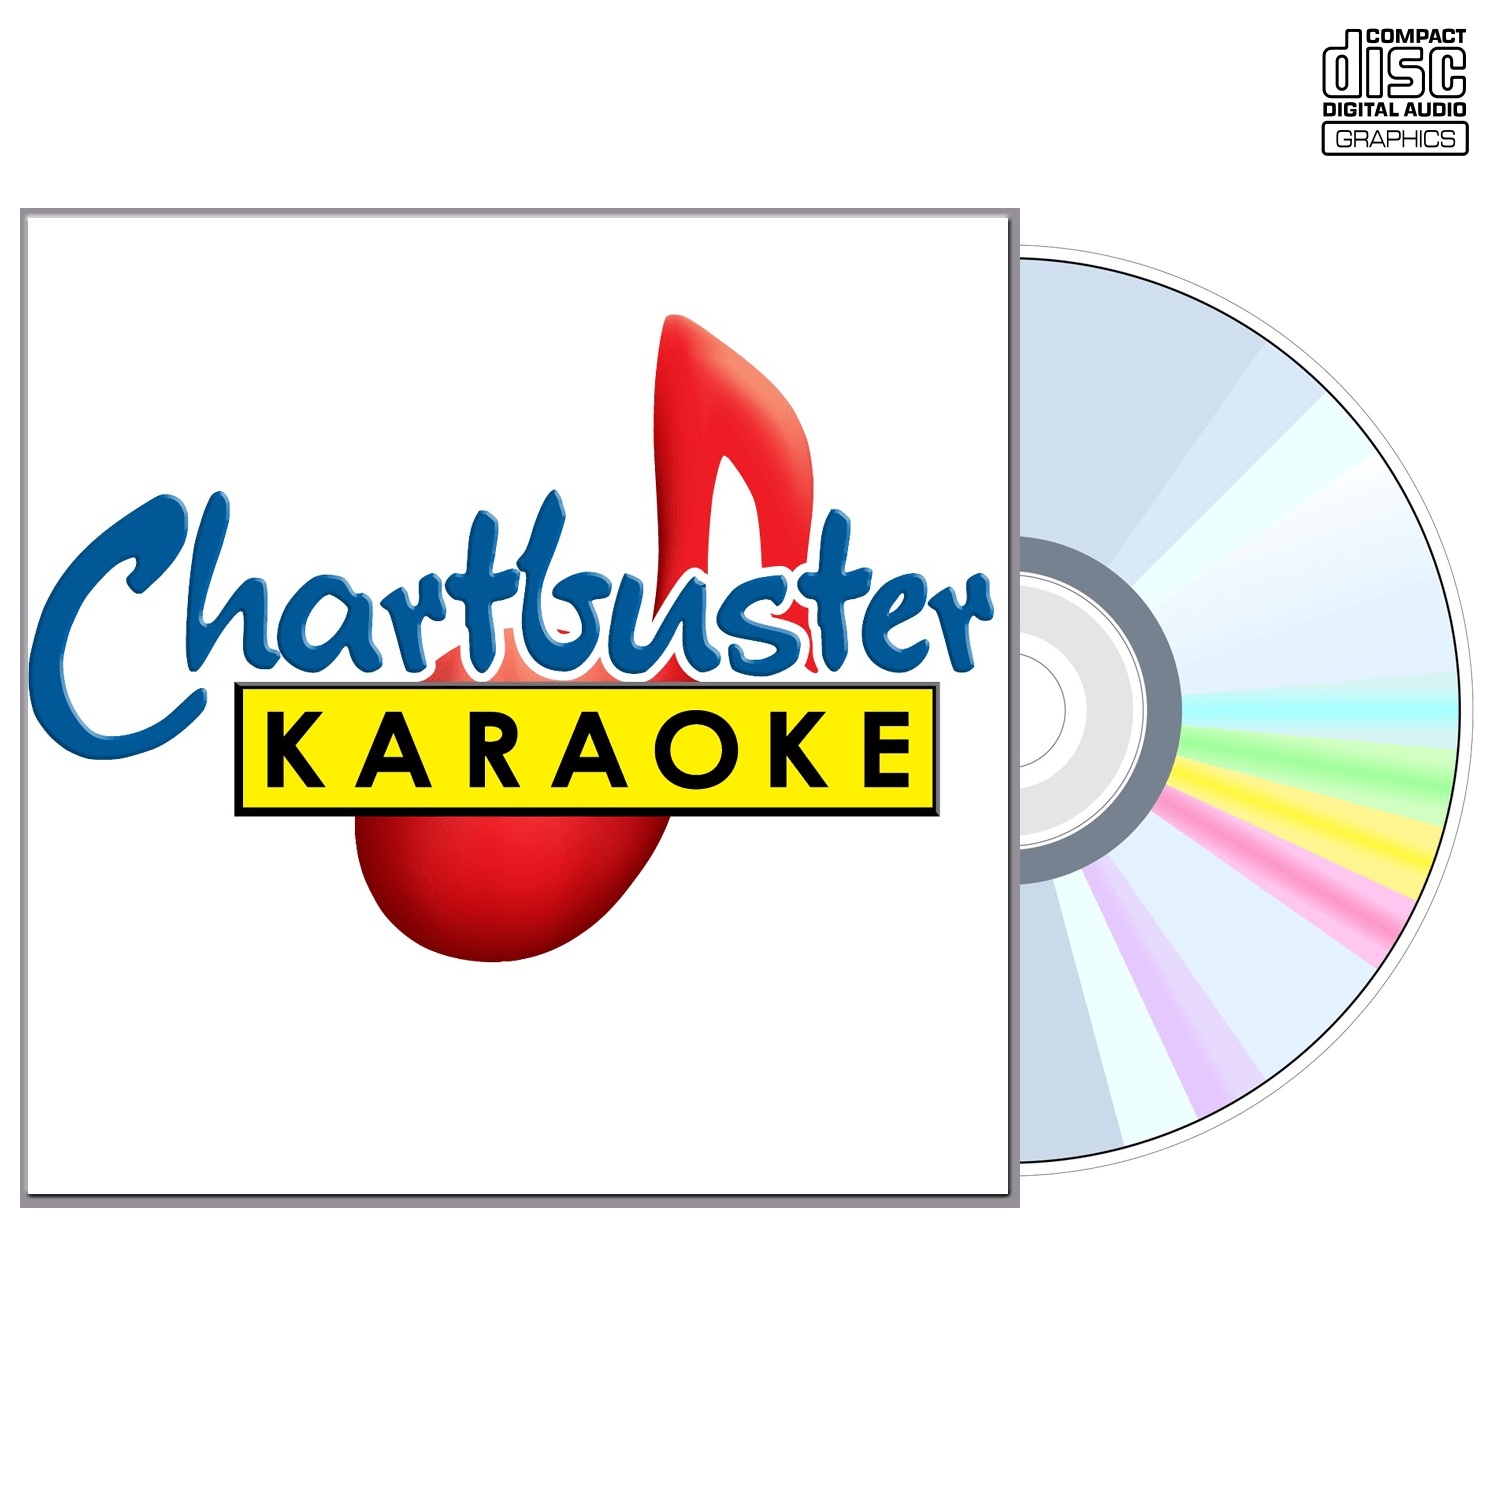 Kool And The Gang - CD+G - Chartbuster Karaoke - Karaoke Home Entertainment